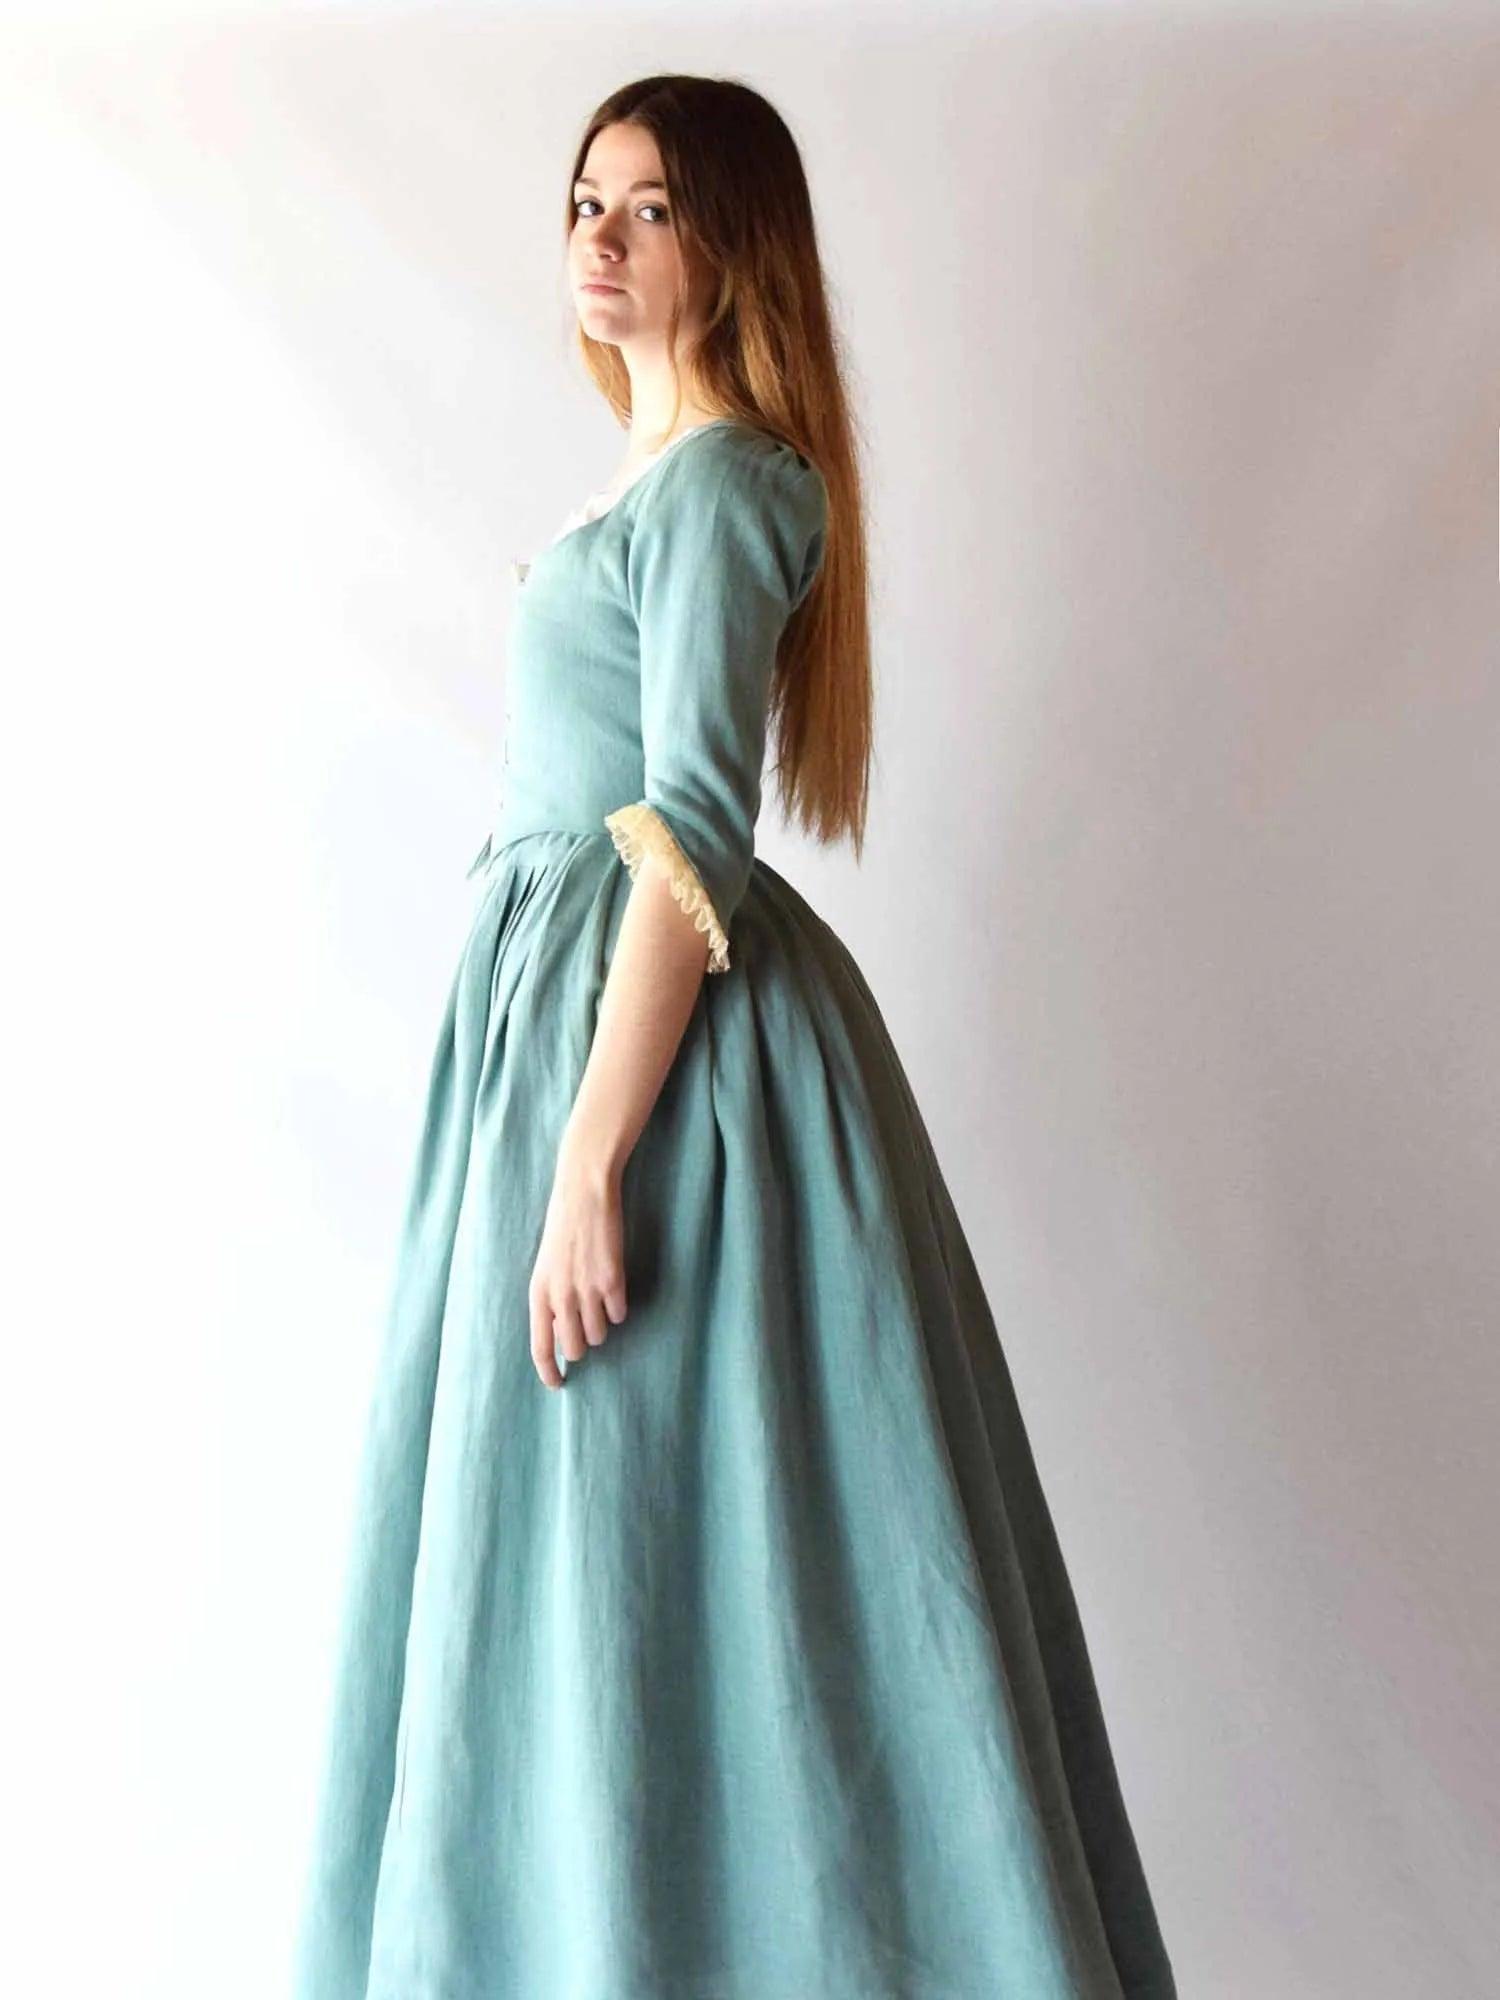 LOUISE, 18th-Century Dress in Almond Green Linen - Atelier Serraspina